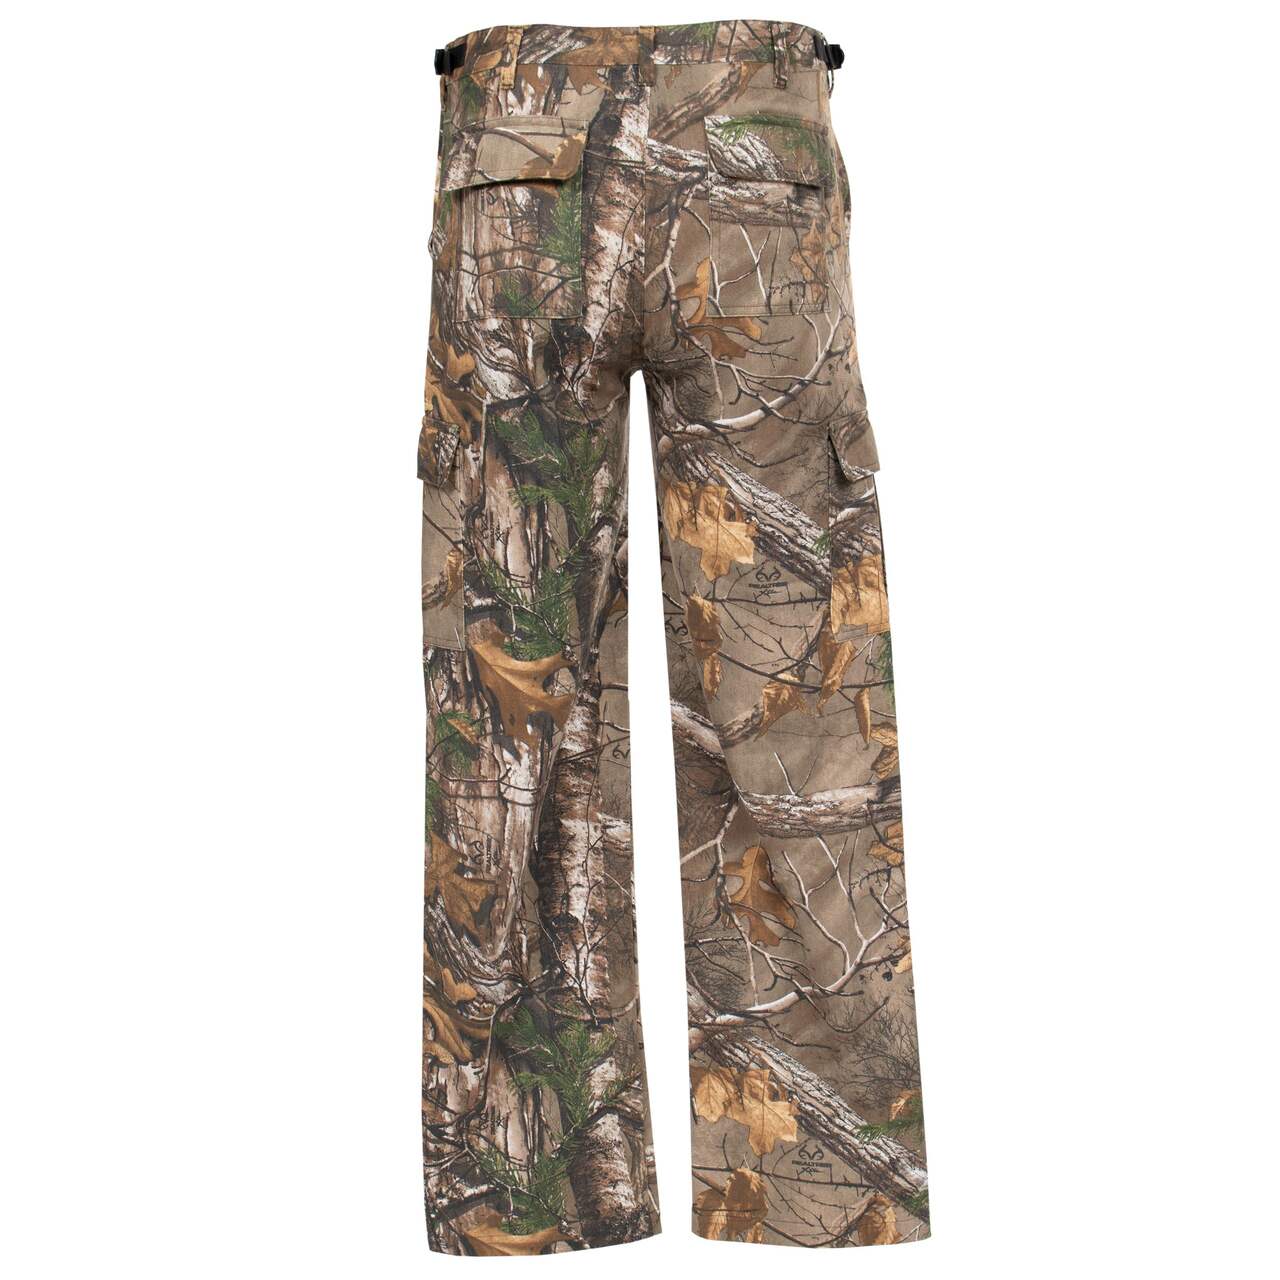 Camo Pants Leggings 100% Cotton Knit/jersey Camouflage Hunter Boy